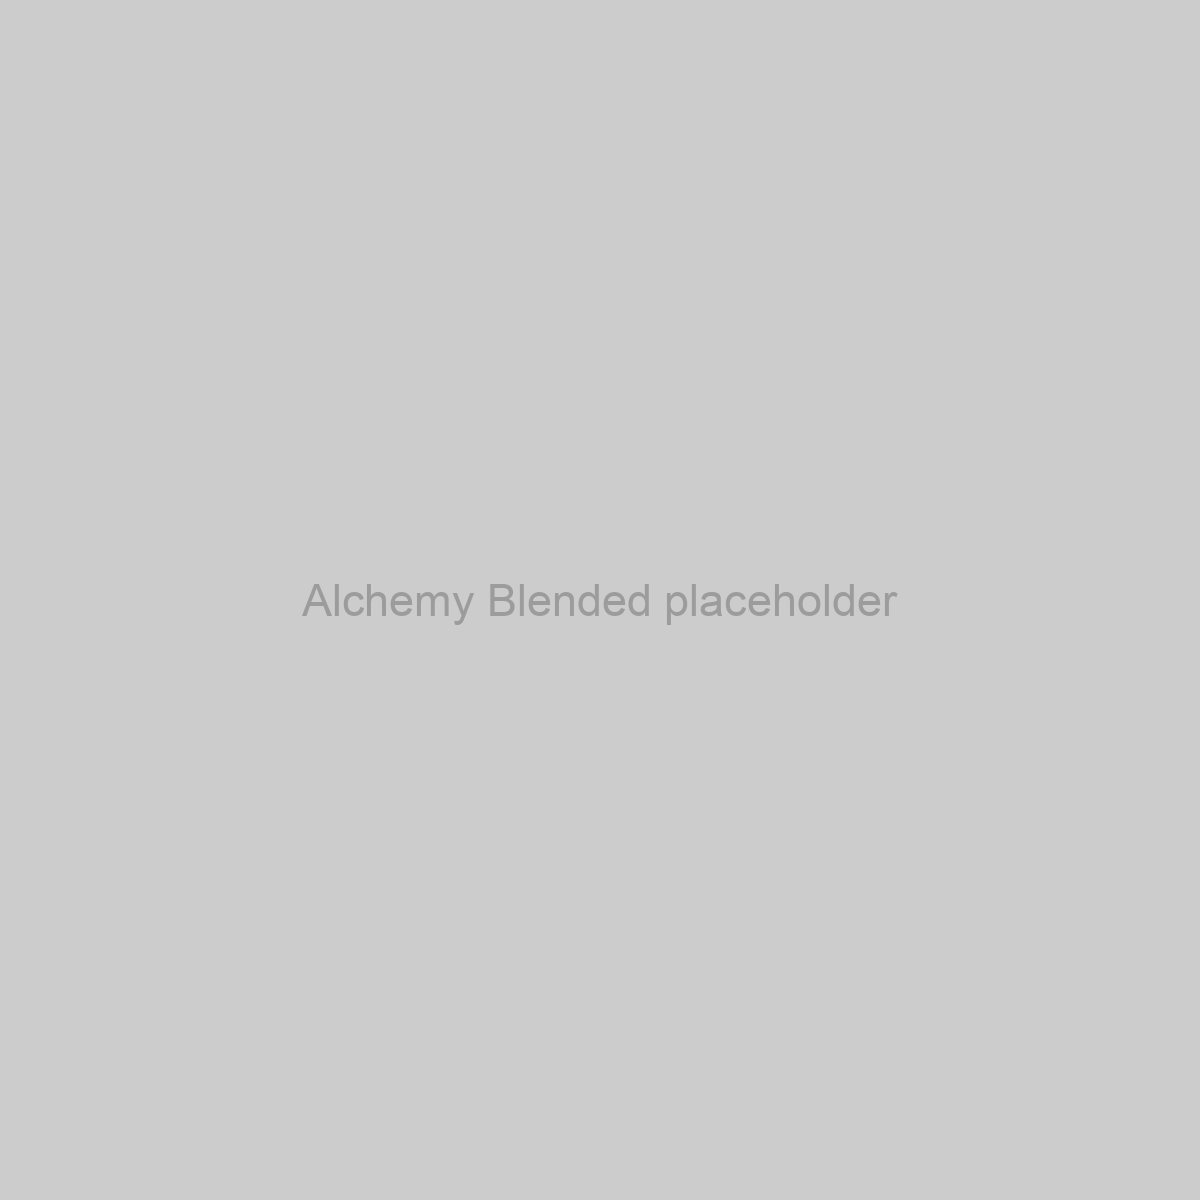 Alchemy Blended Placeholder Image